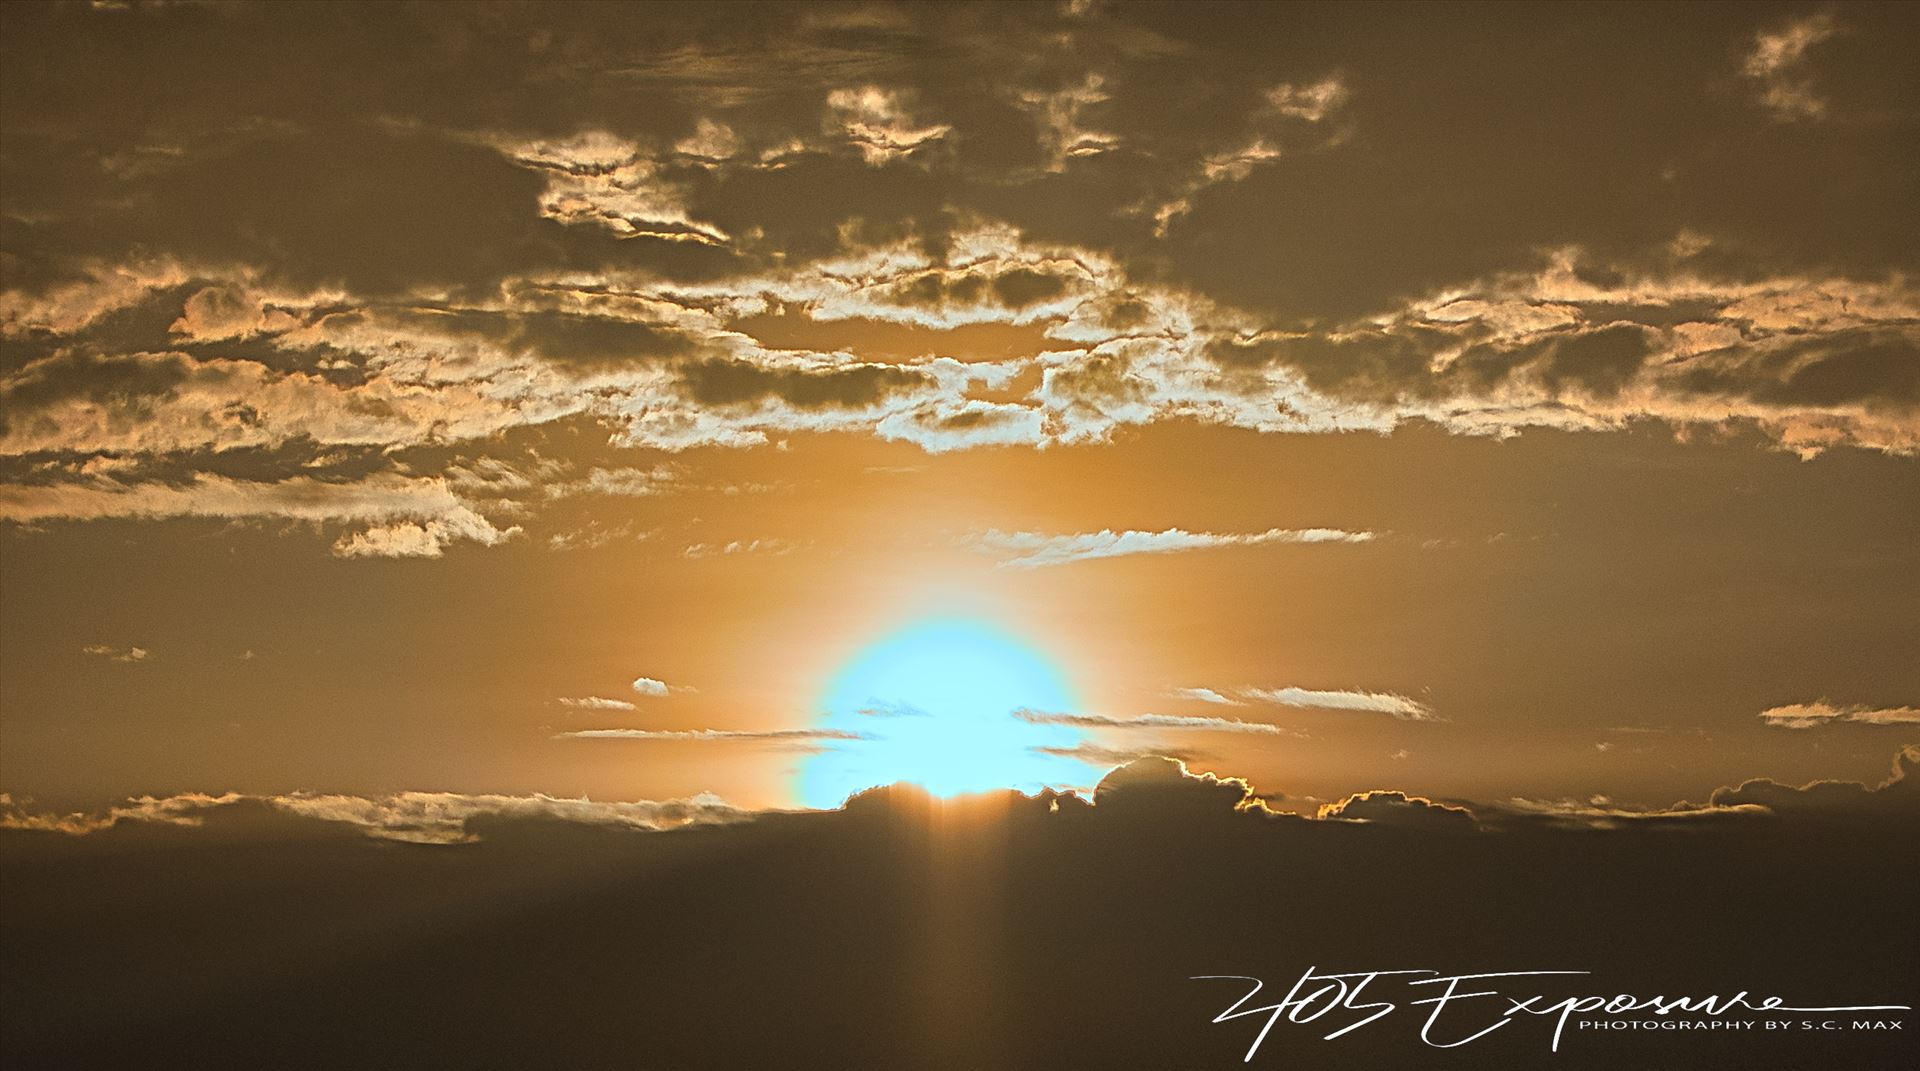 17 Jul 2020 Sunrise.jpg -  by 405 Exposure